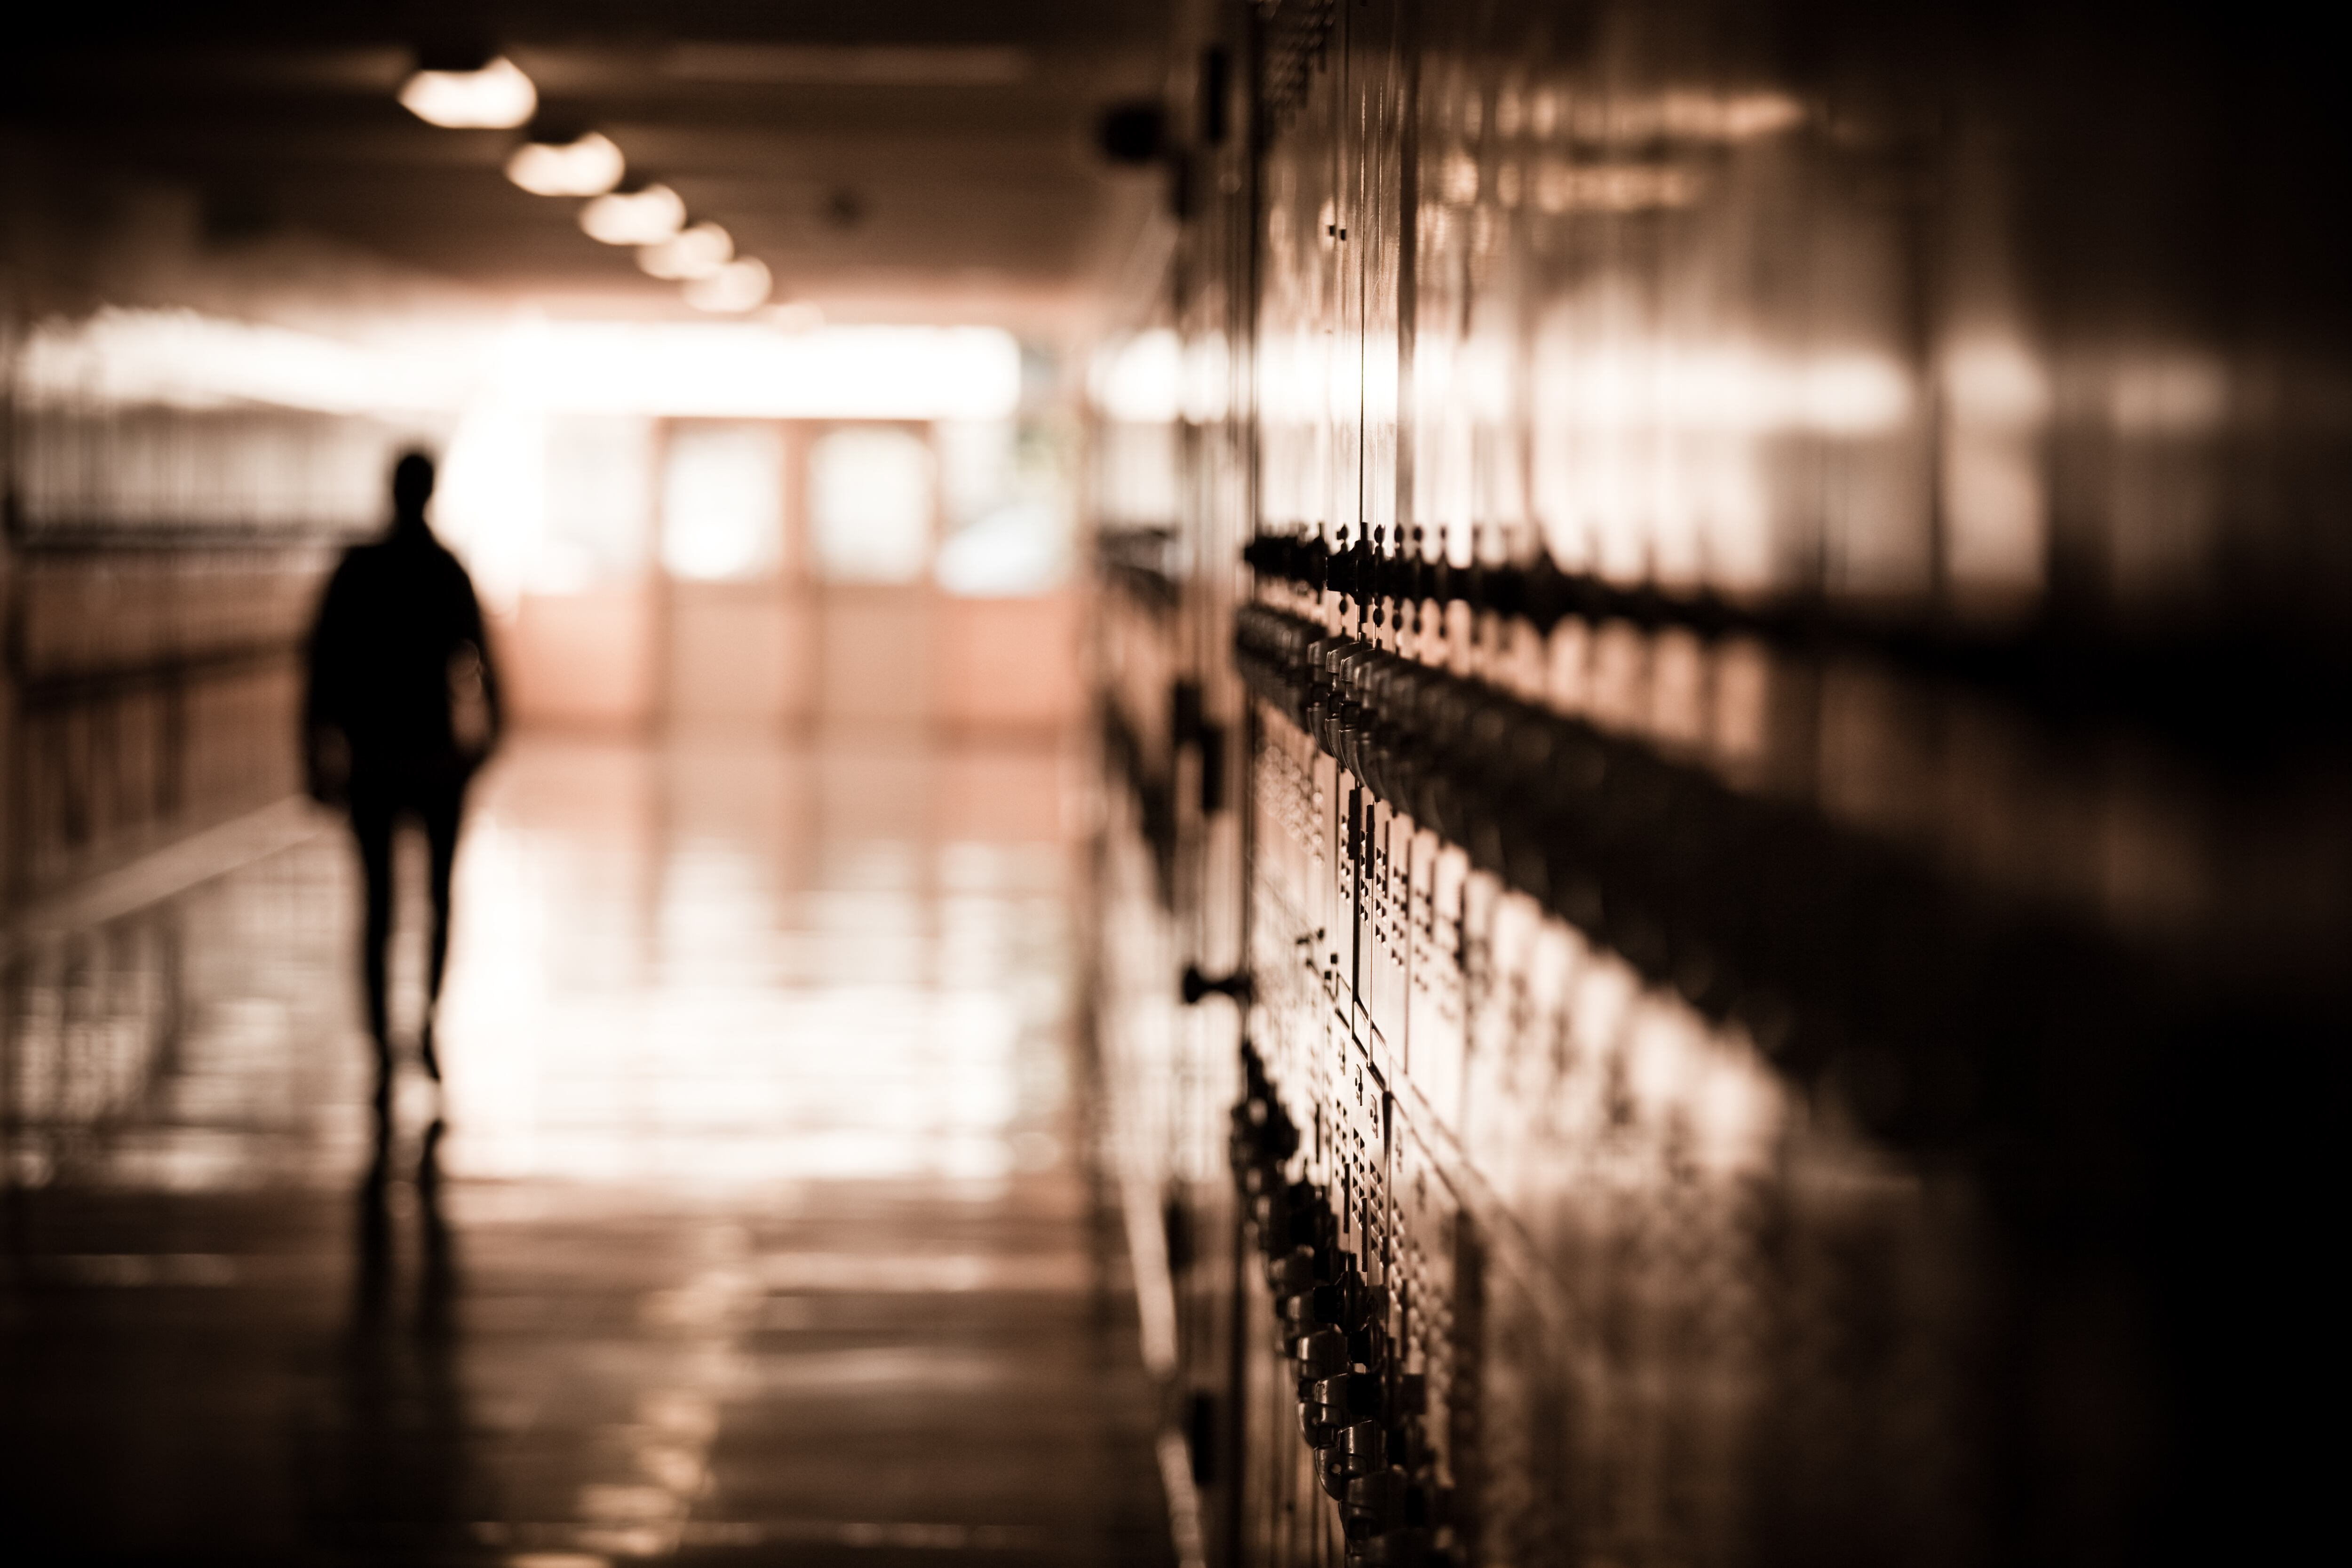 A student in silhouette walks through a school hallway.